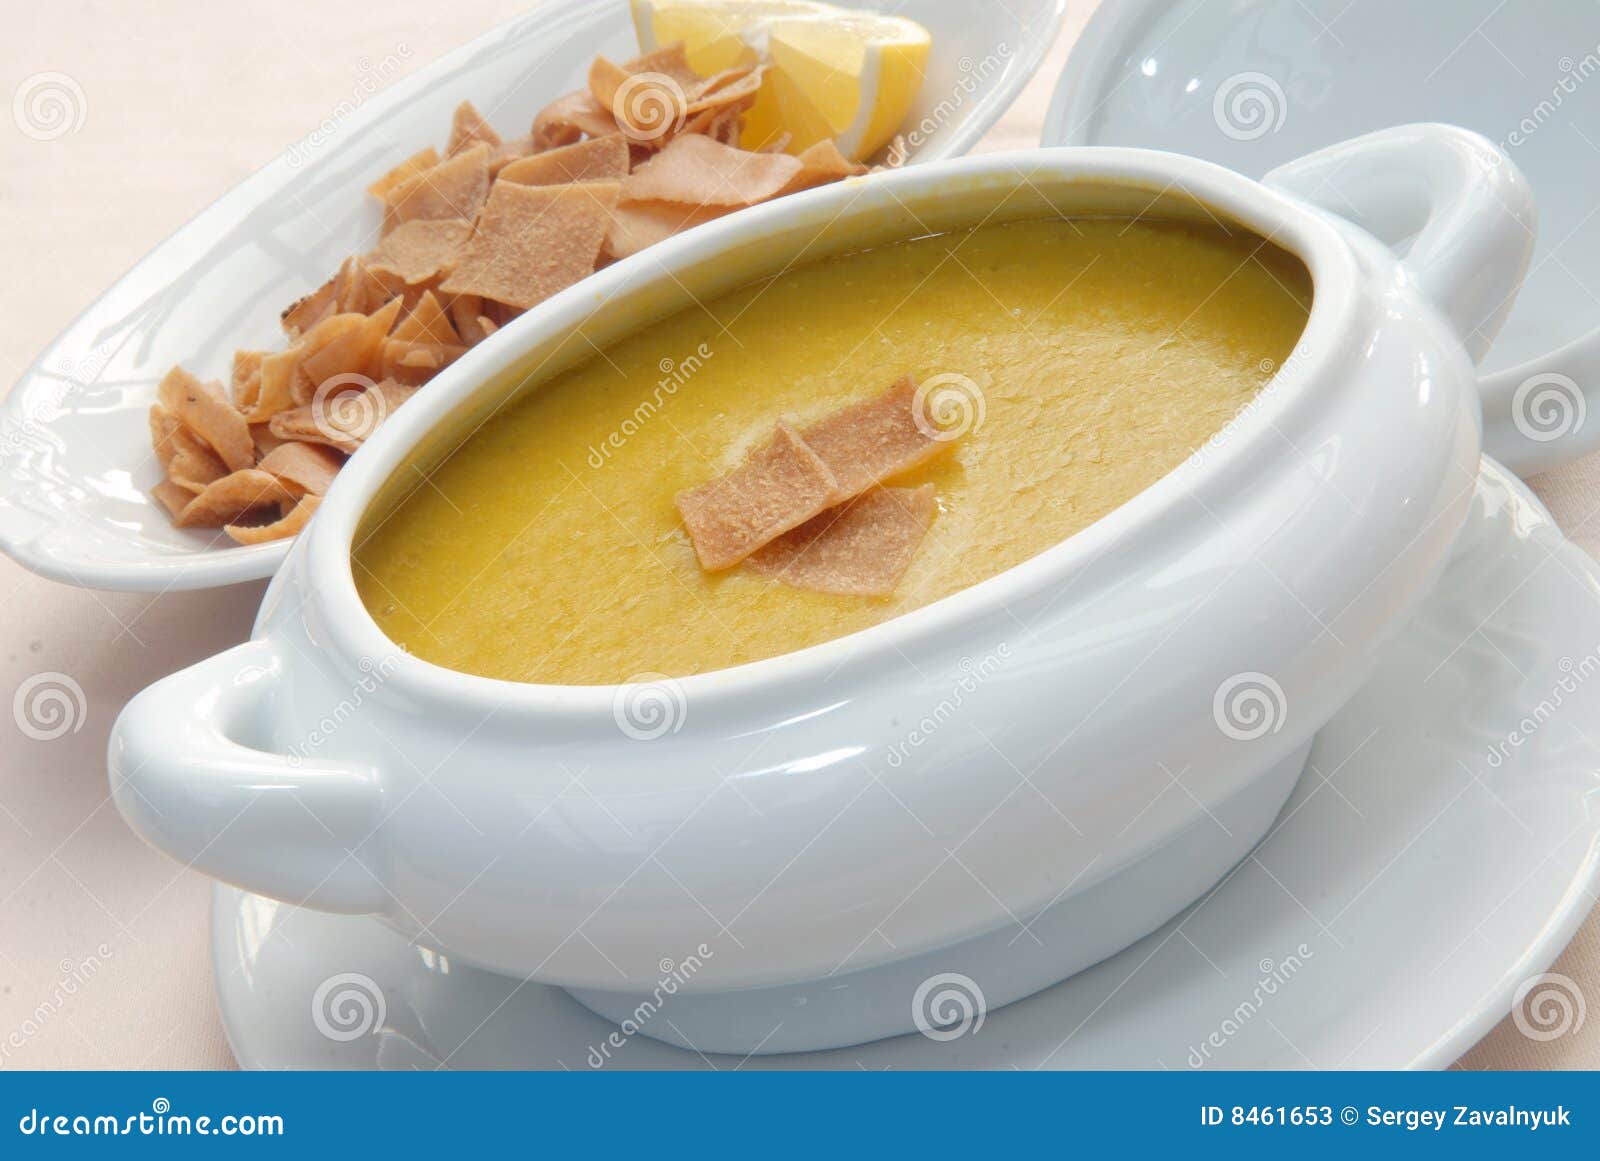 lentil soup with crackers